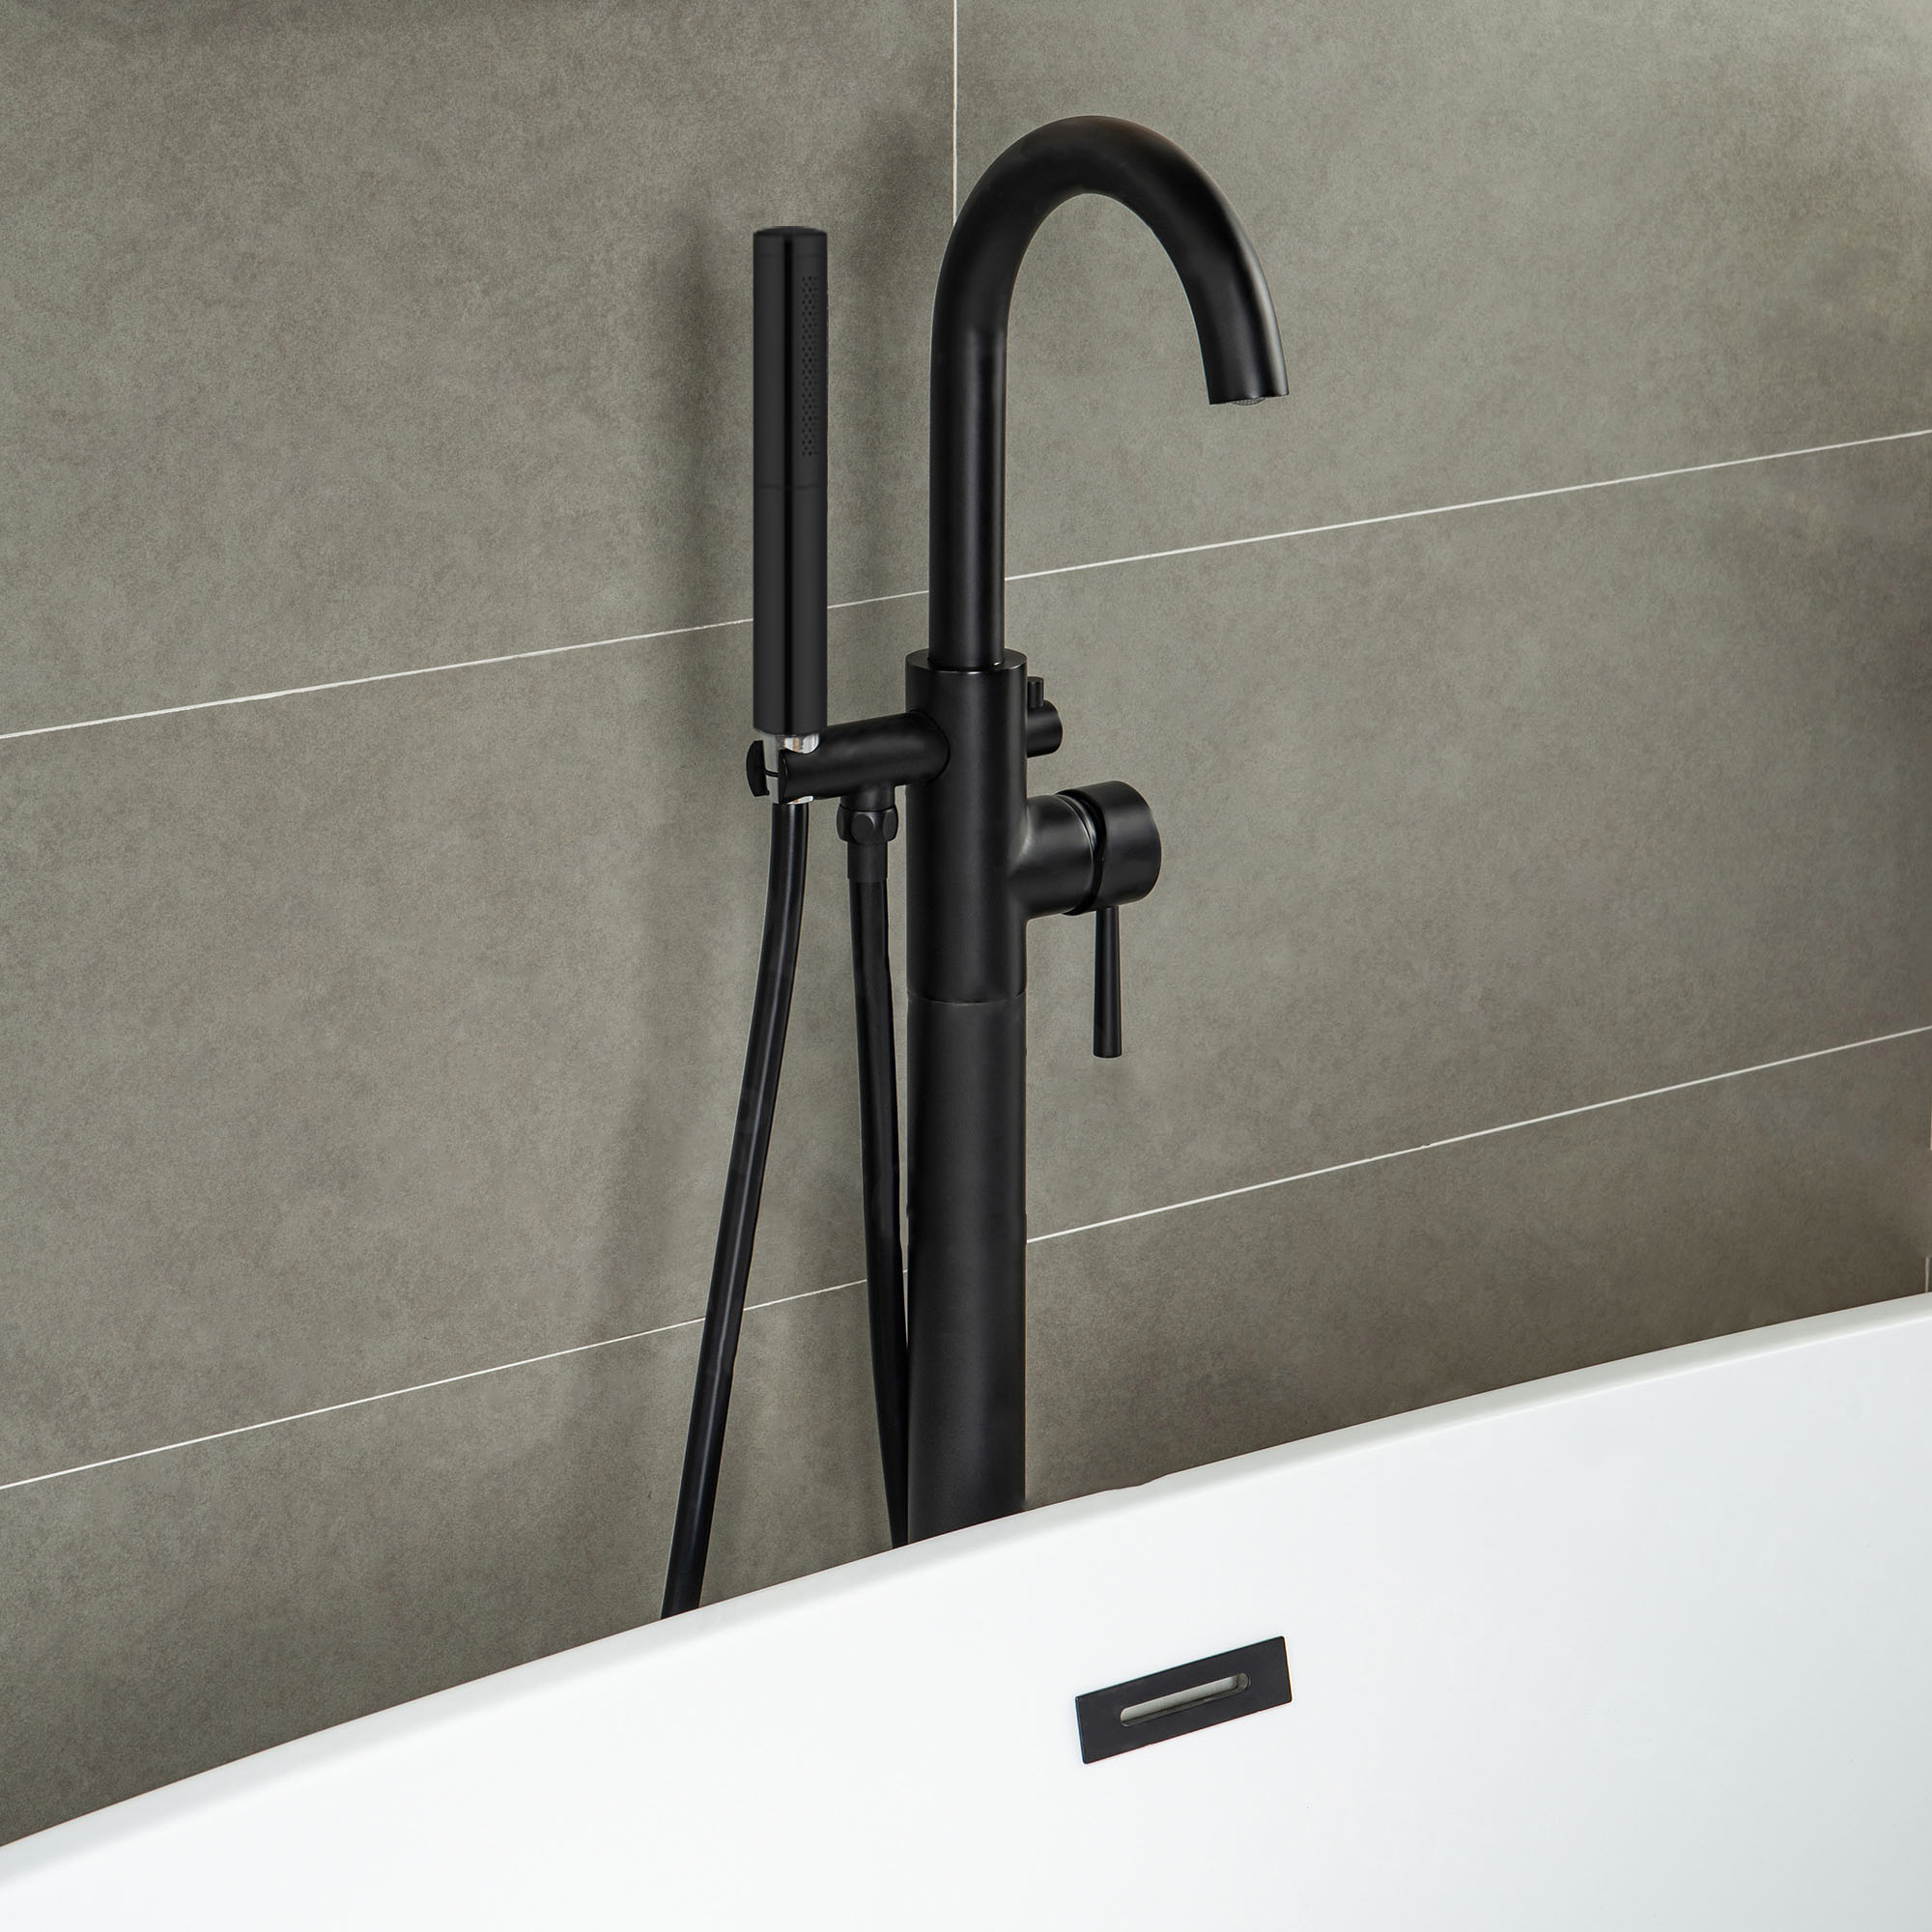  WOODBRIDGE F0006MBDR Contemporary Single Handle Floor Mount Freestanding Tub Filler Faucet with Hand shower in Matte Black Finish._14904